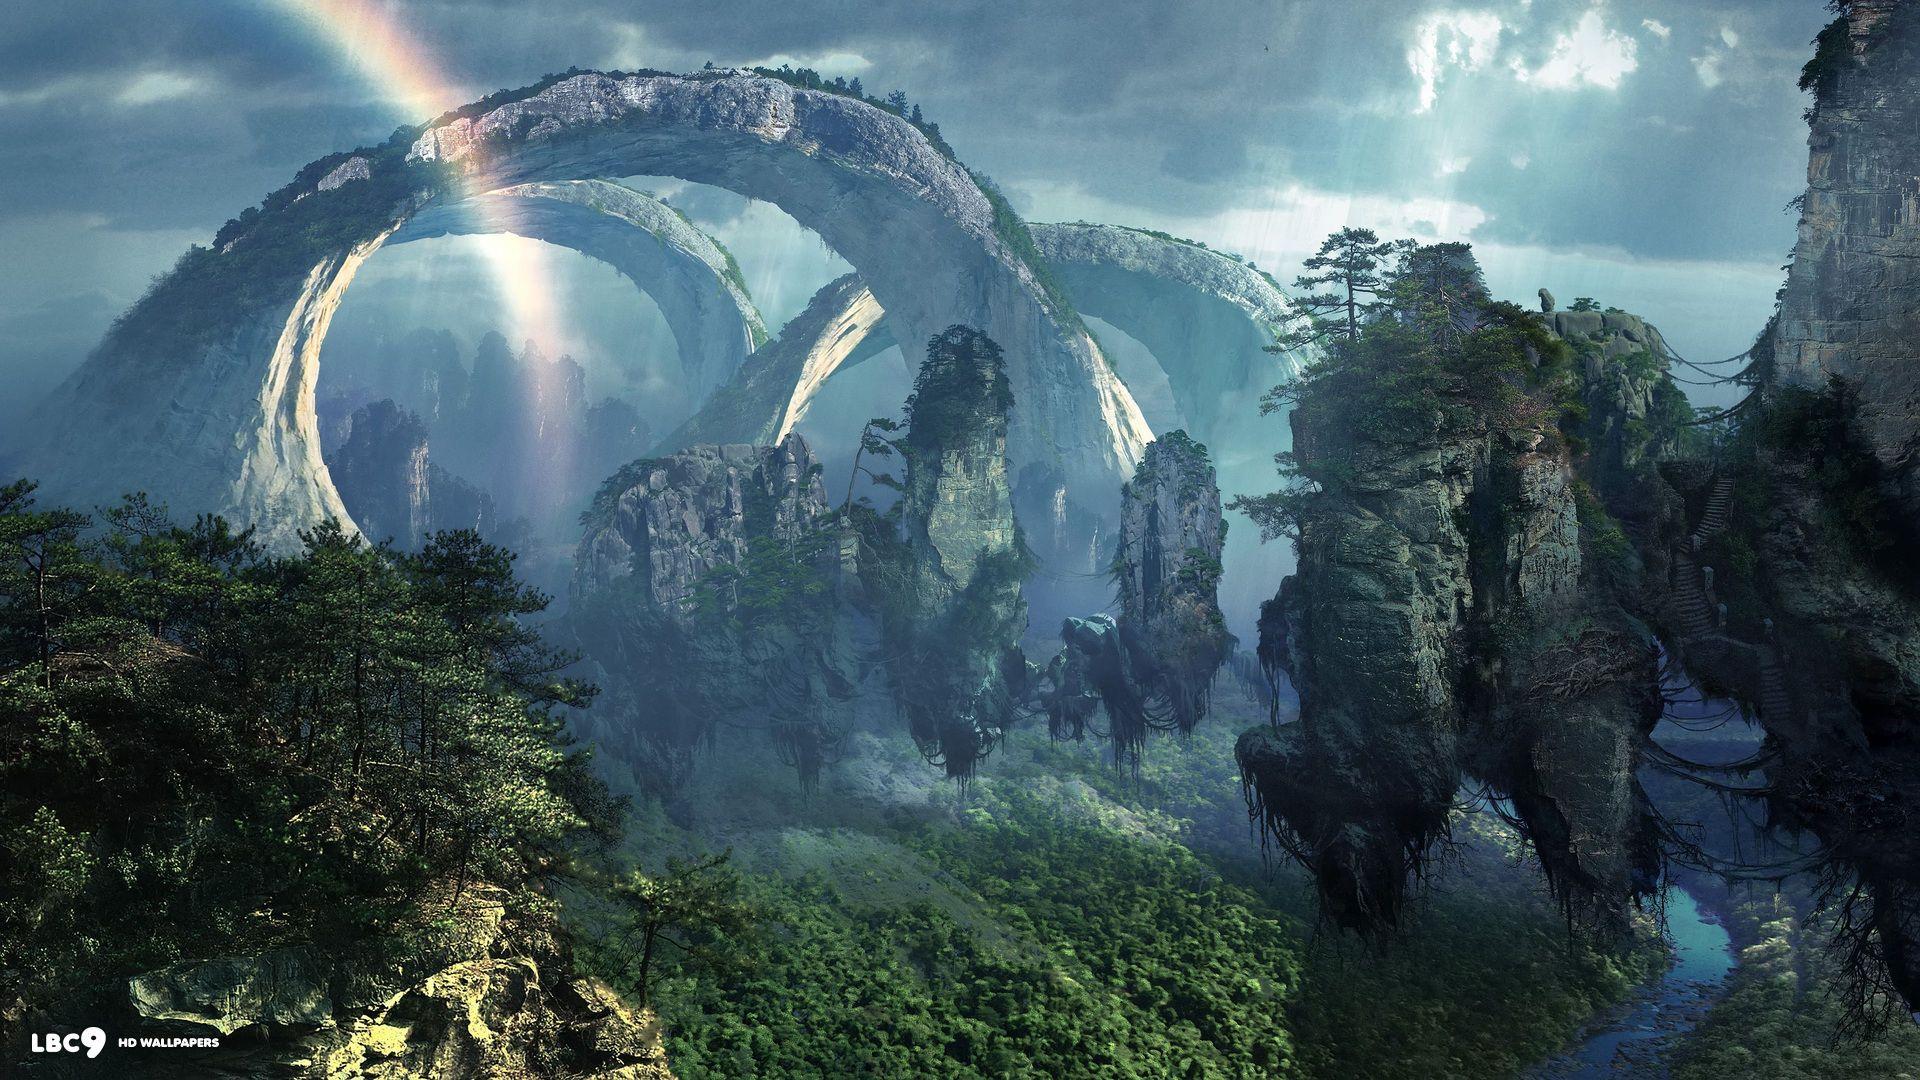 avatar wallpaper and movie HD background. Fantasy landscape, Fantasy art landscapes, Alien worlds